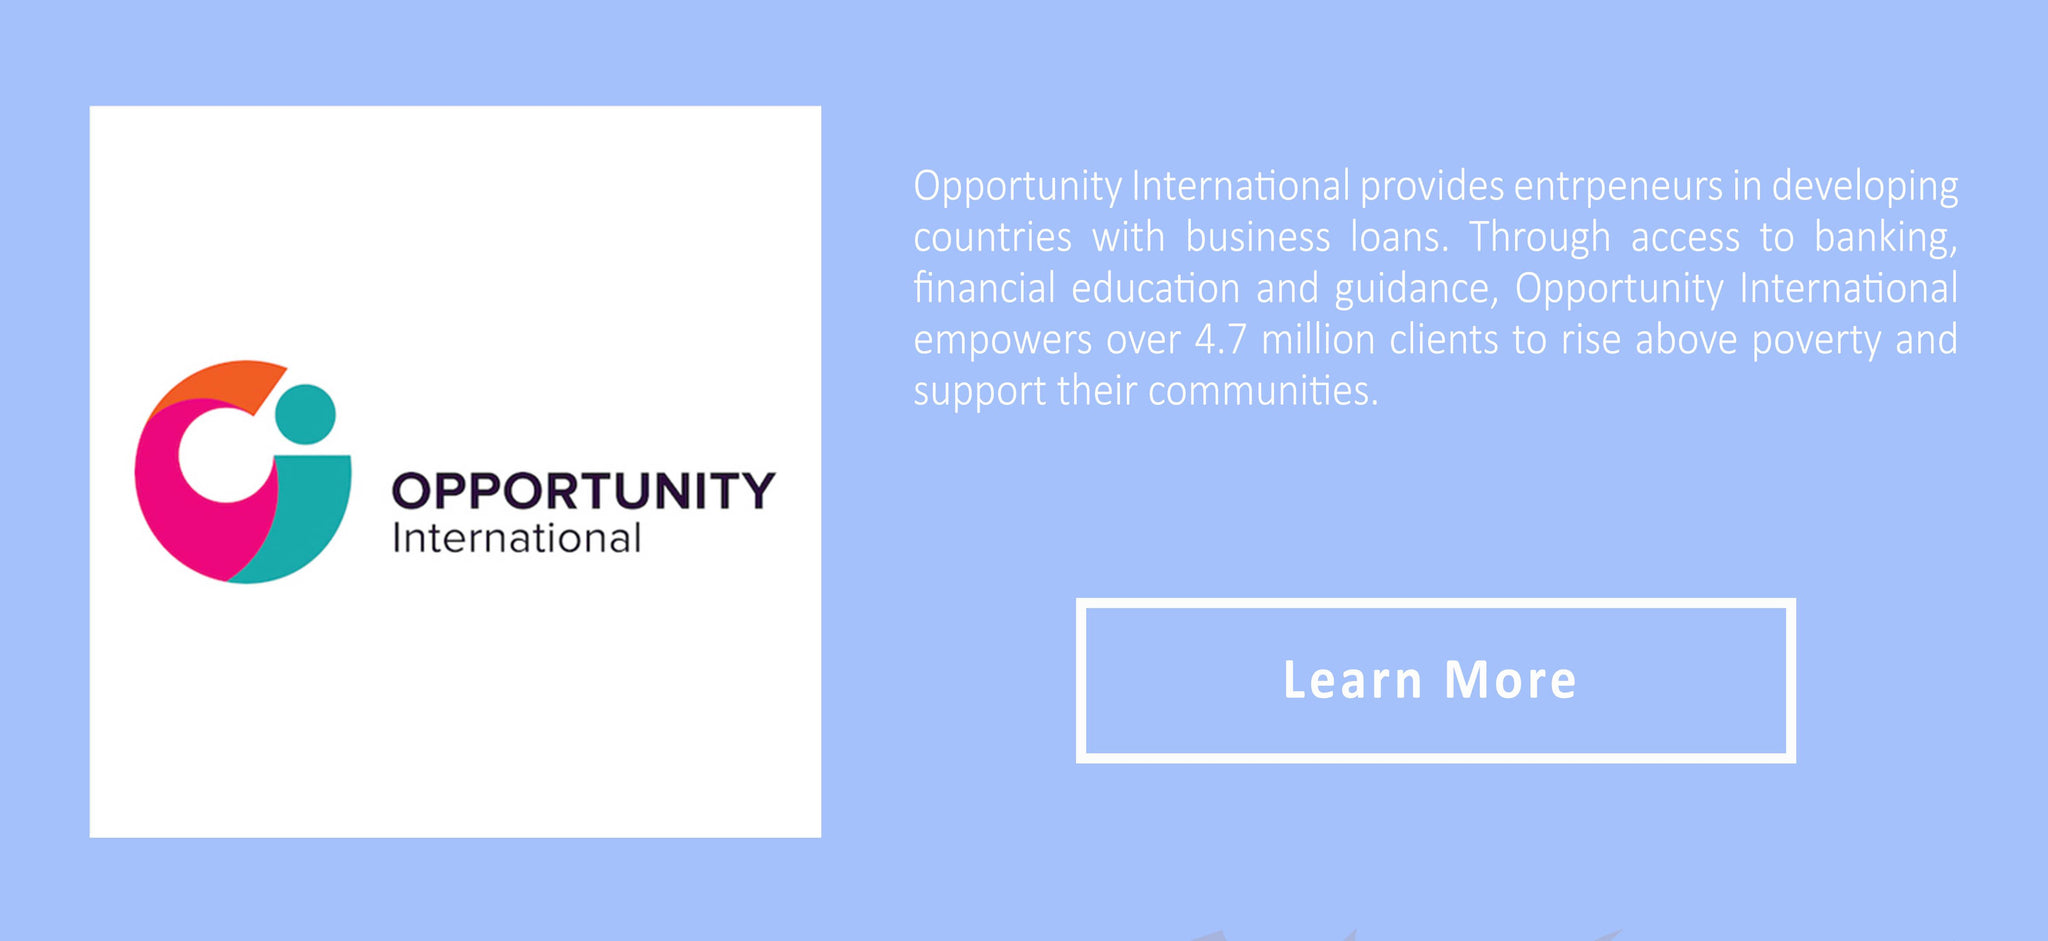 Opportunity international logo and description